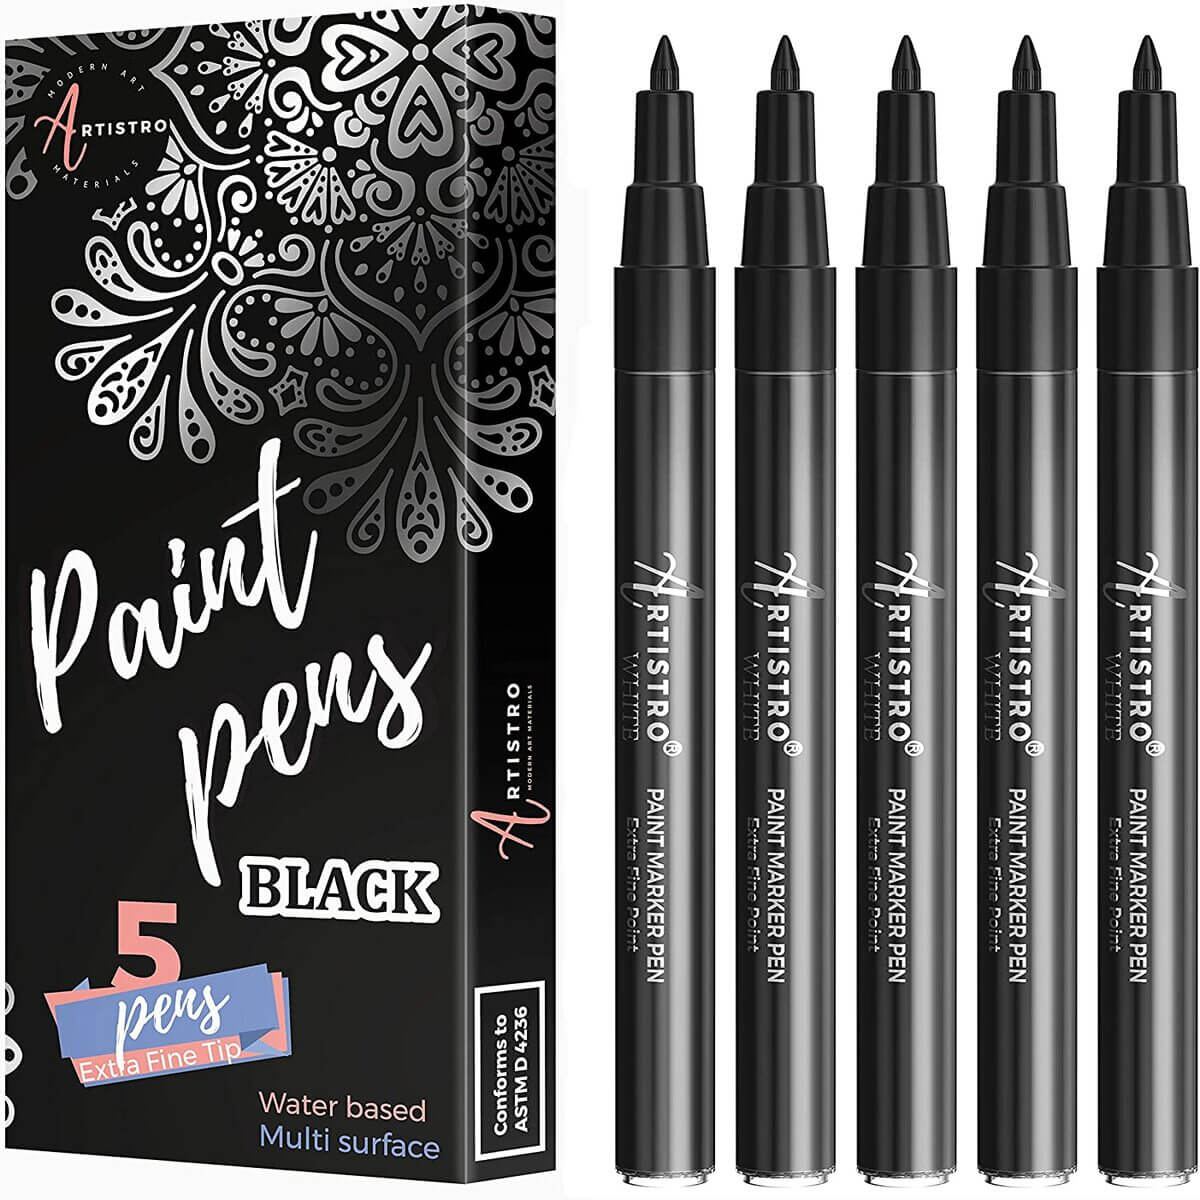 product 5 Extra Fine Tip black paint pens